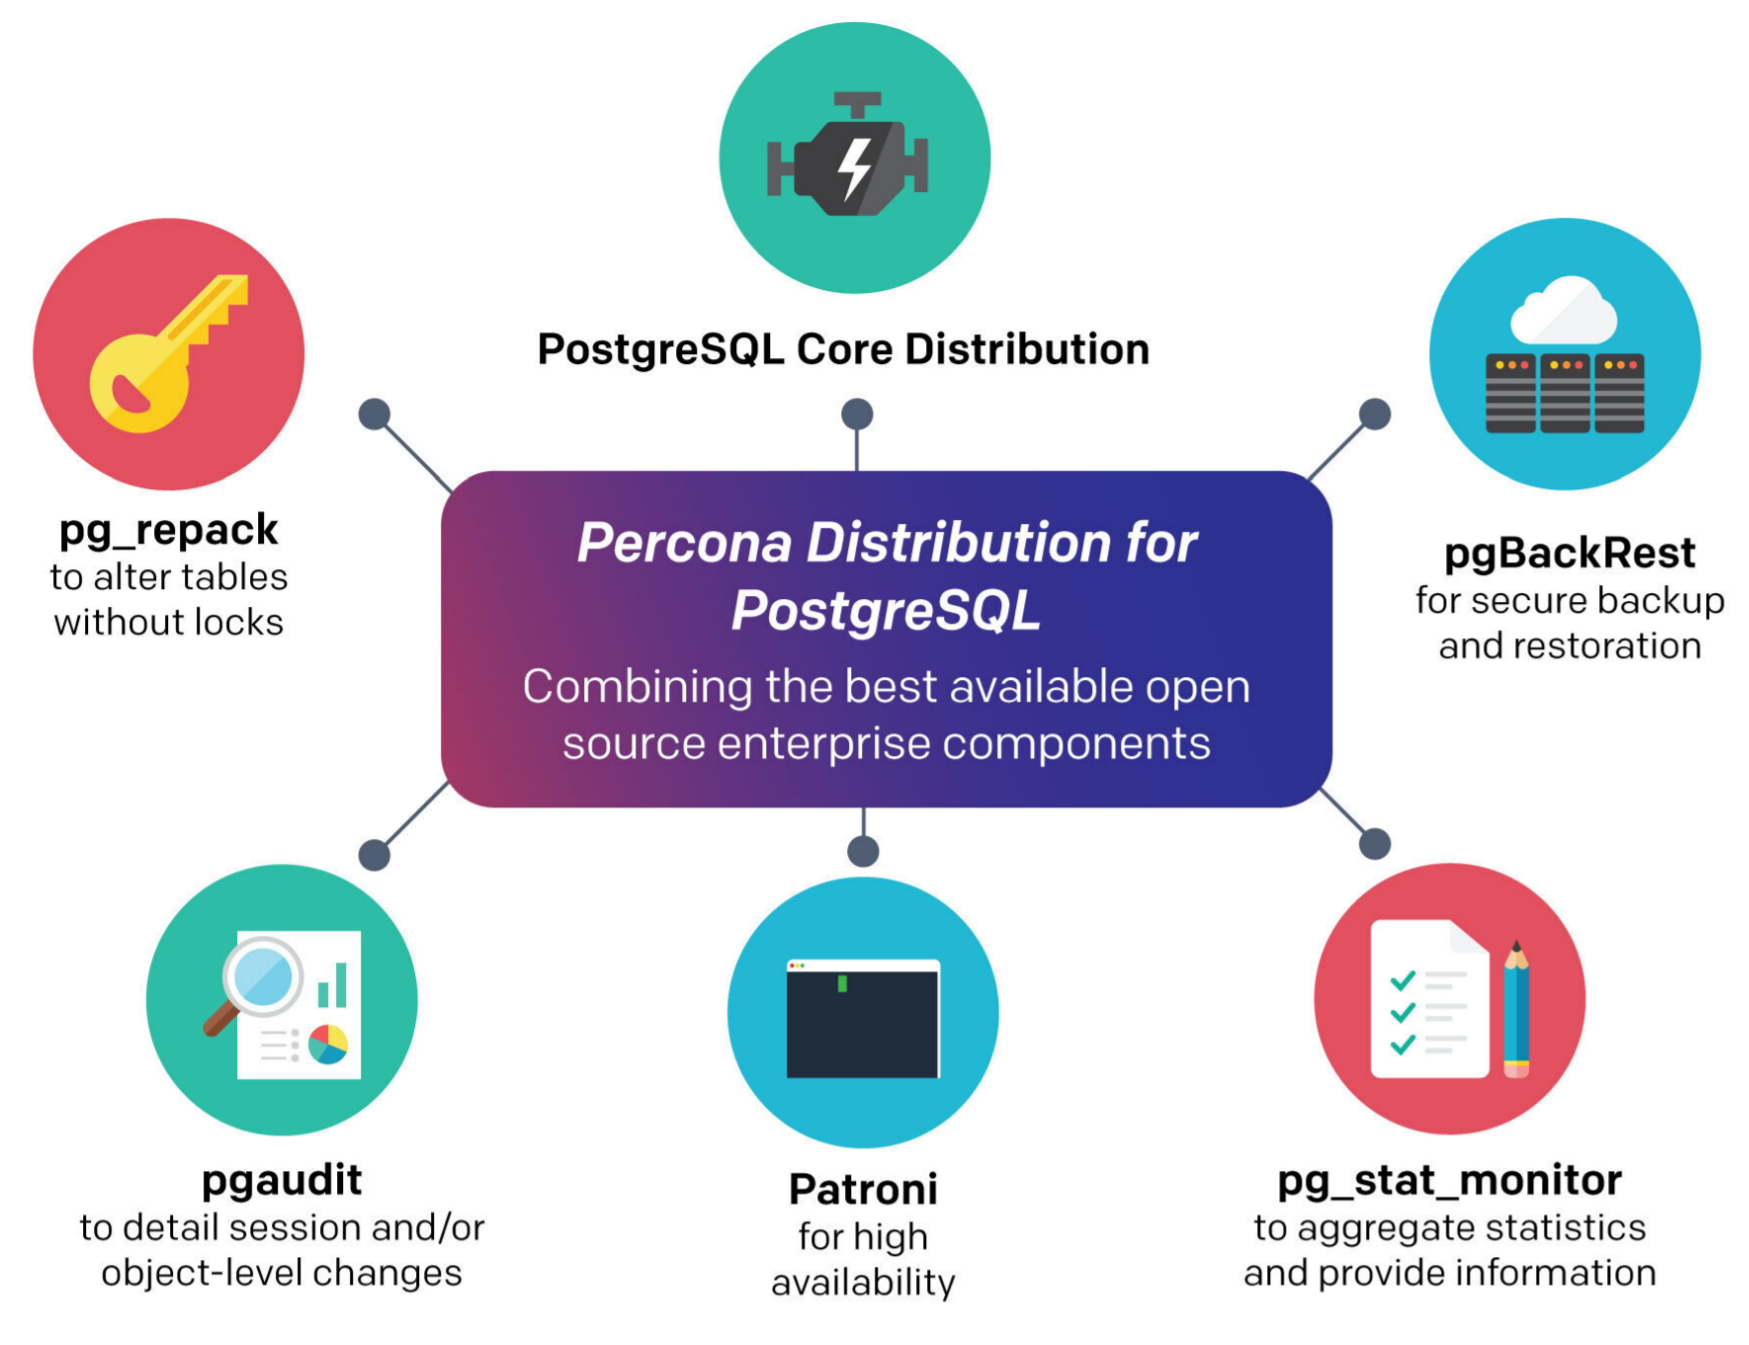 Percona Distribution for PostgreSQL features illustration